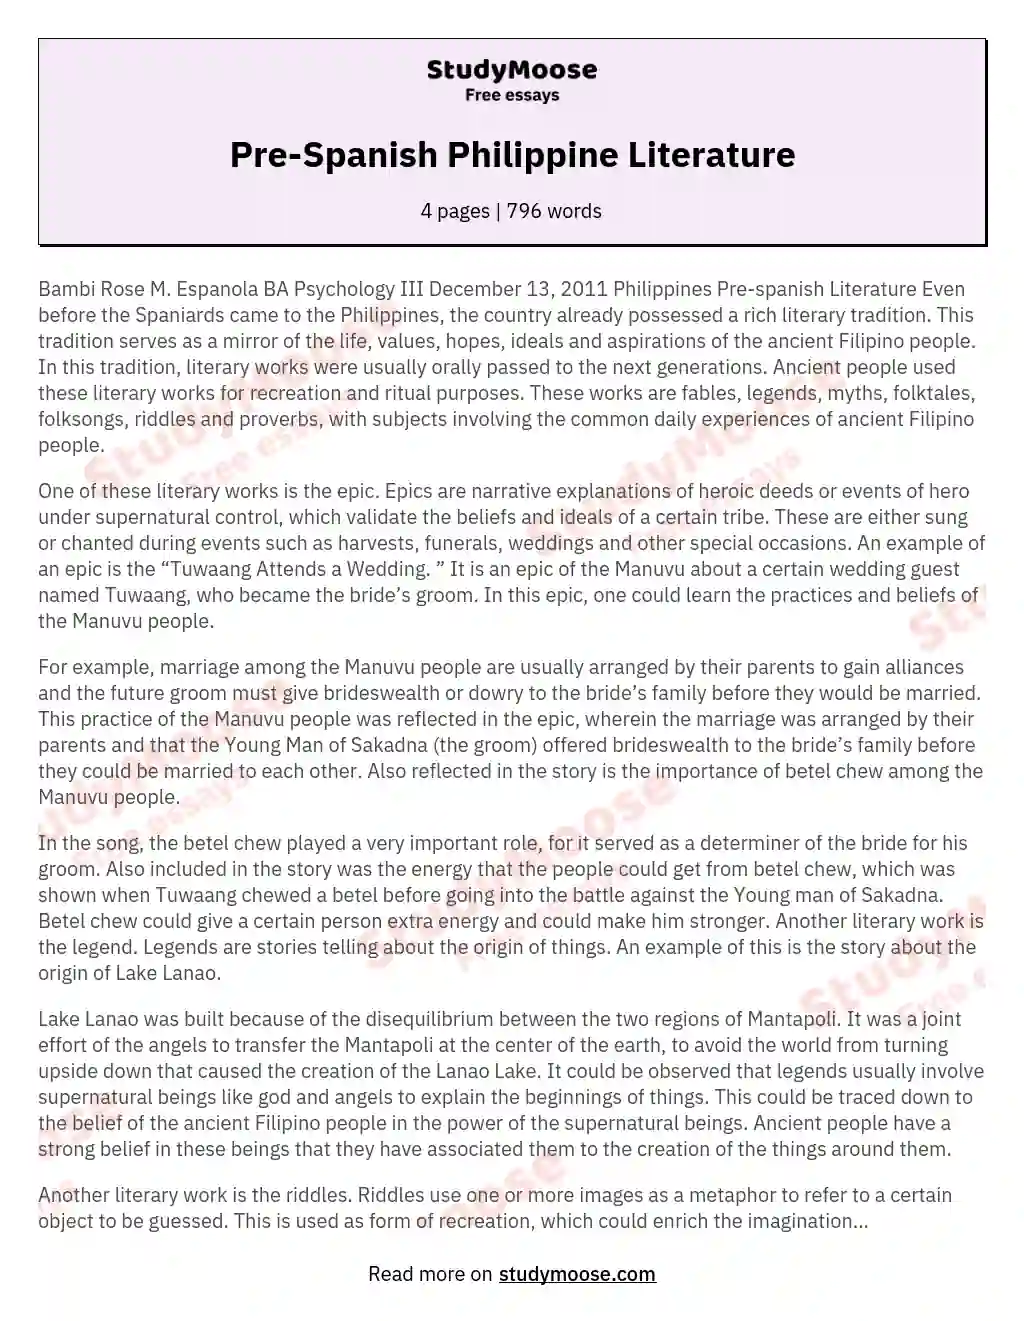 Pre-Spanish Philippine Literature essay